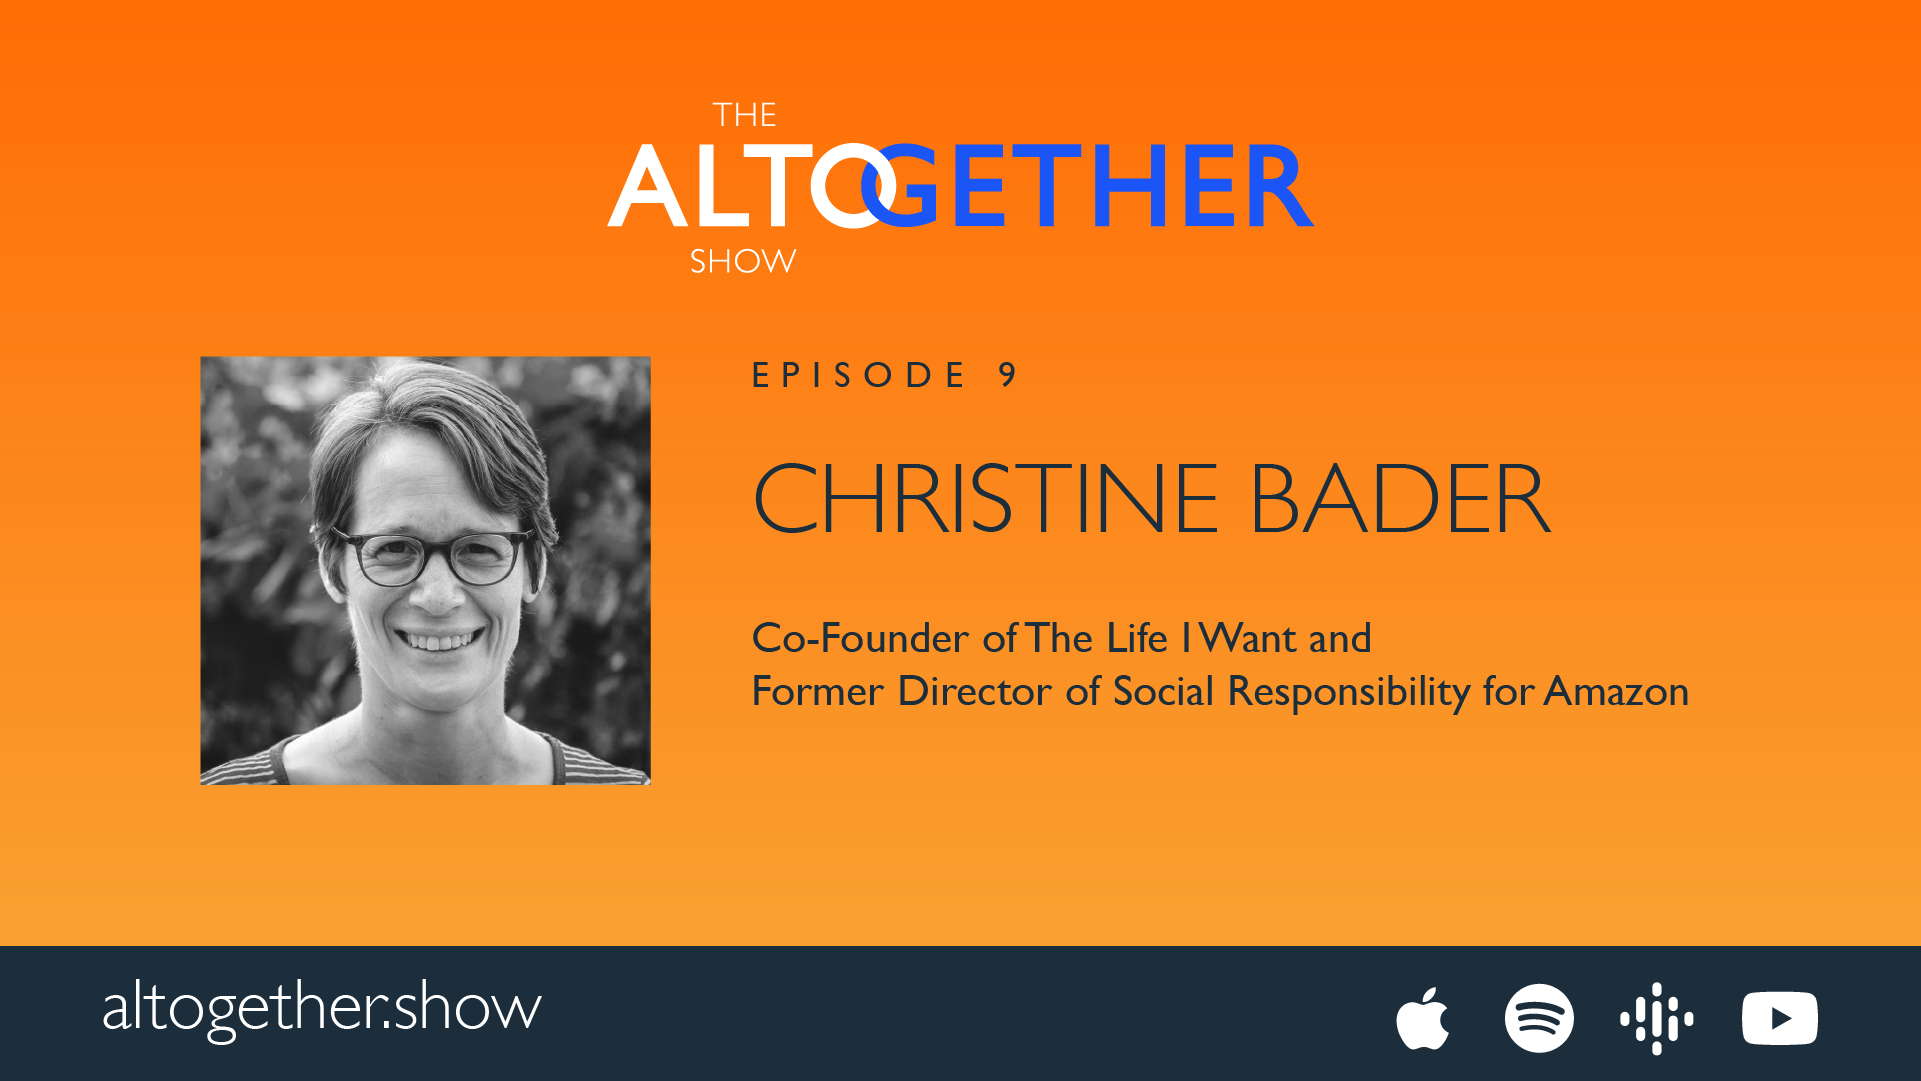 THE ALTOGETHER SHOW - Christine Bader